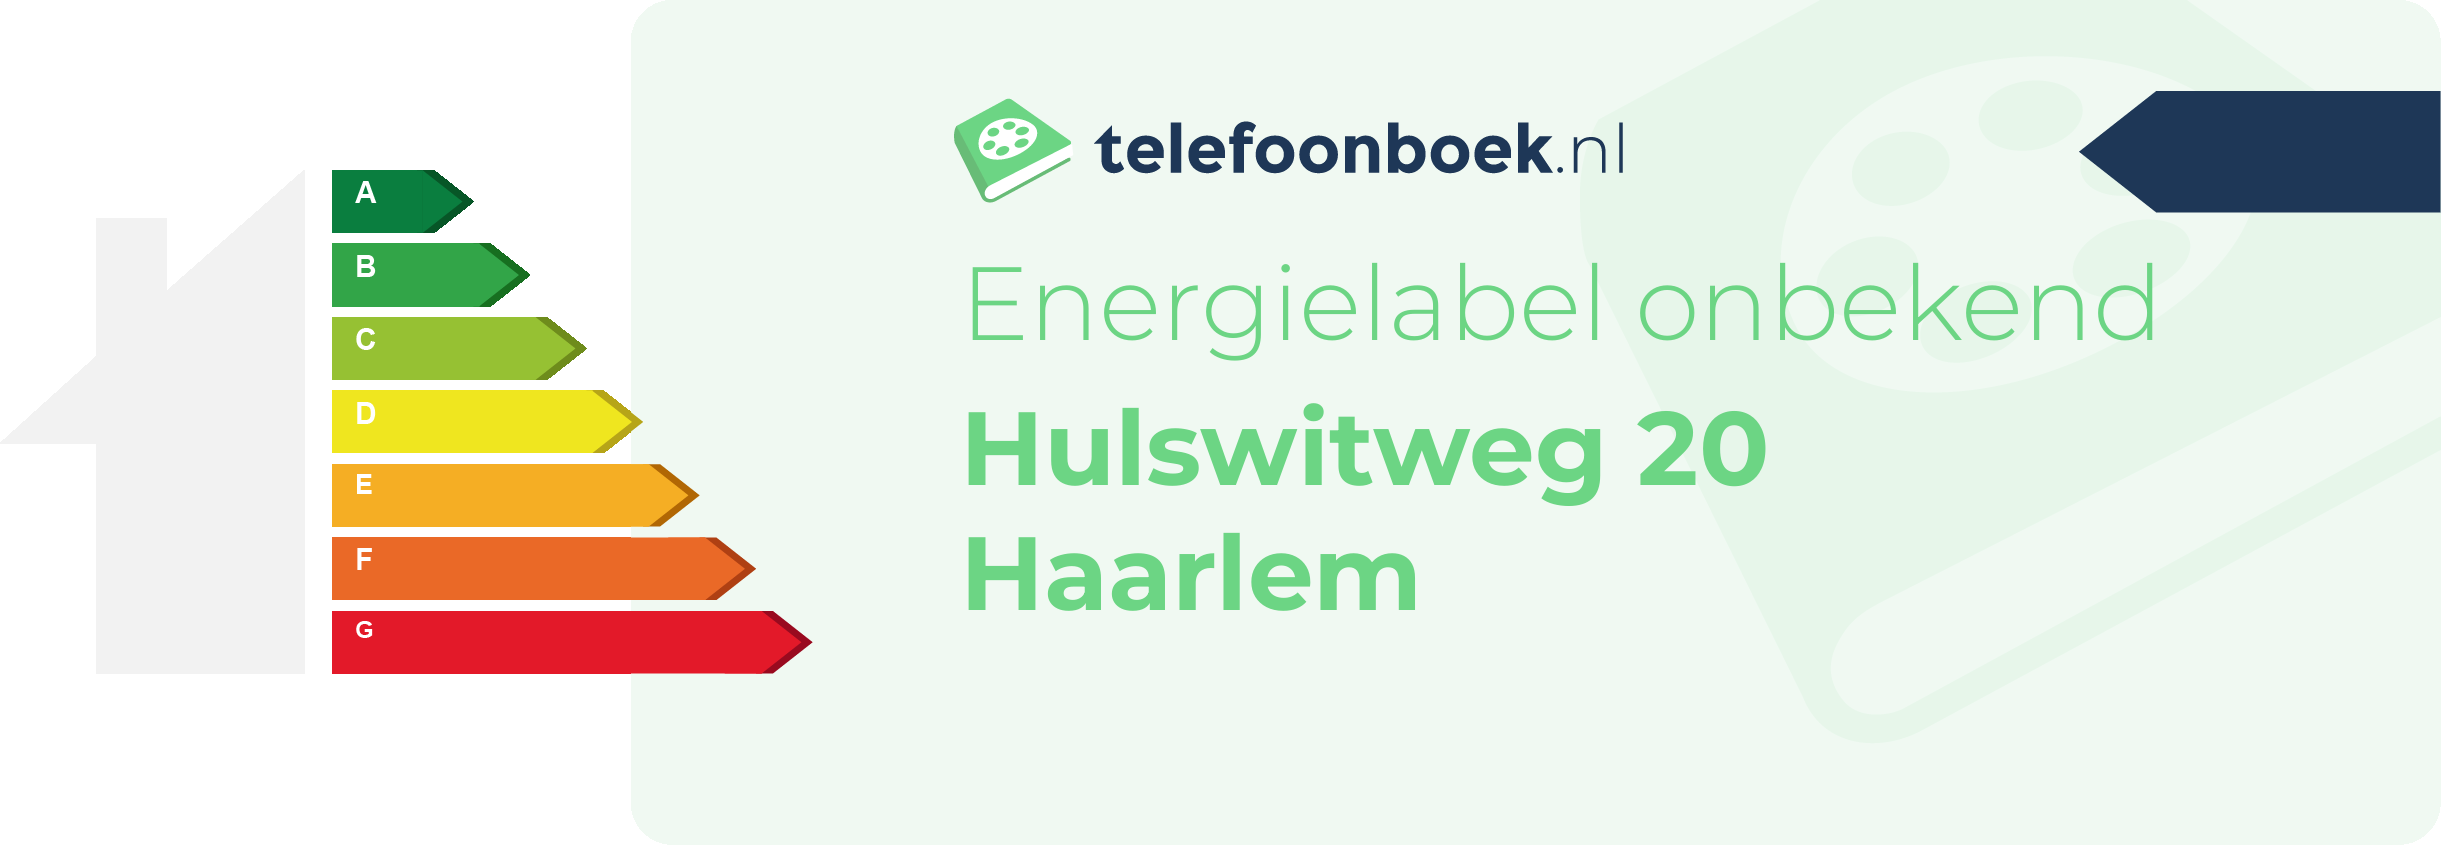 Energielabel Hulswitweg 20 Haarlem